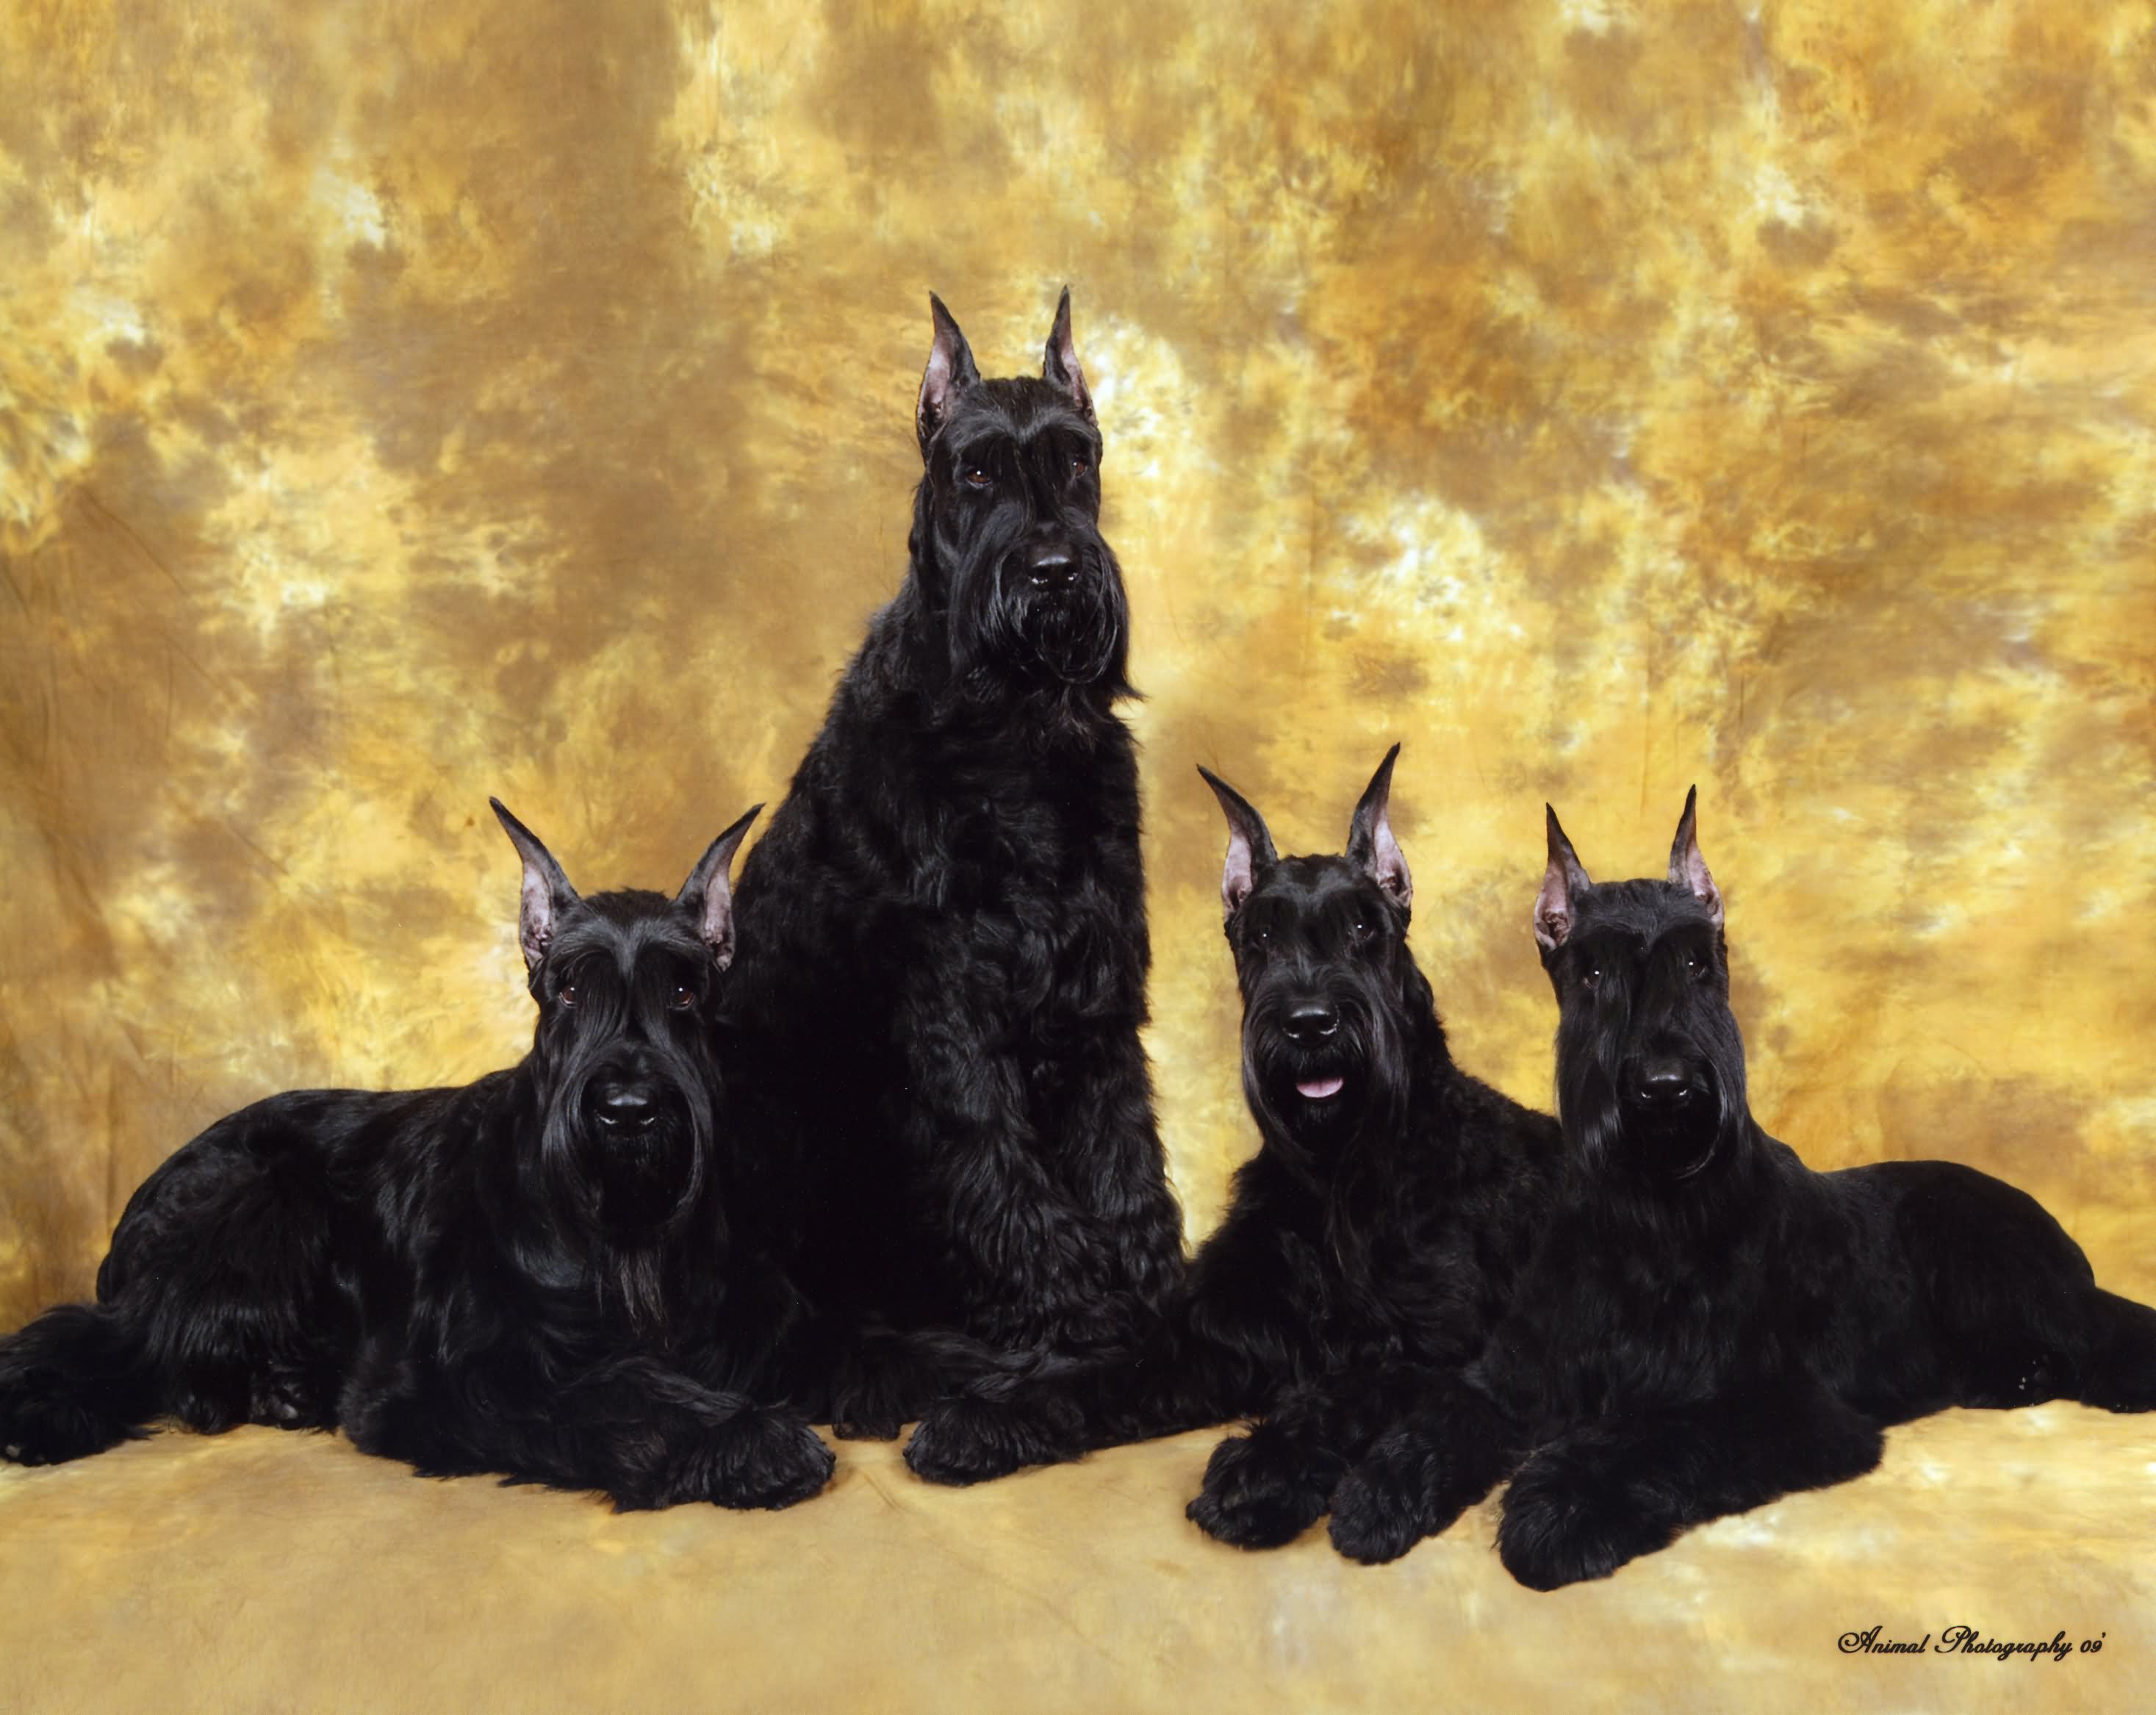 Four Full Grown Giant Schnauzer Dogs